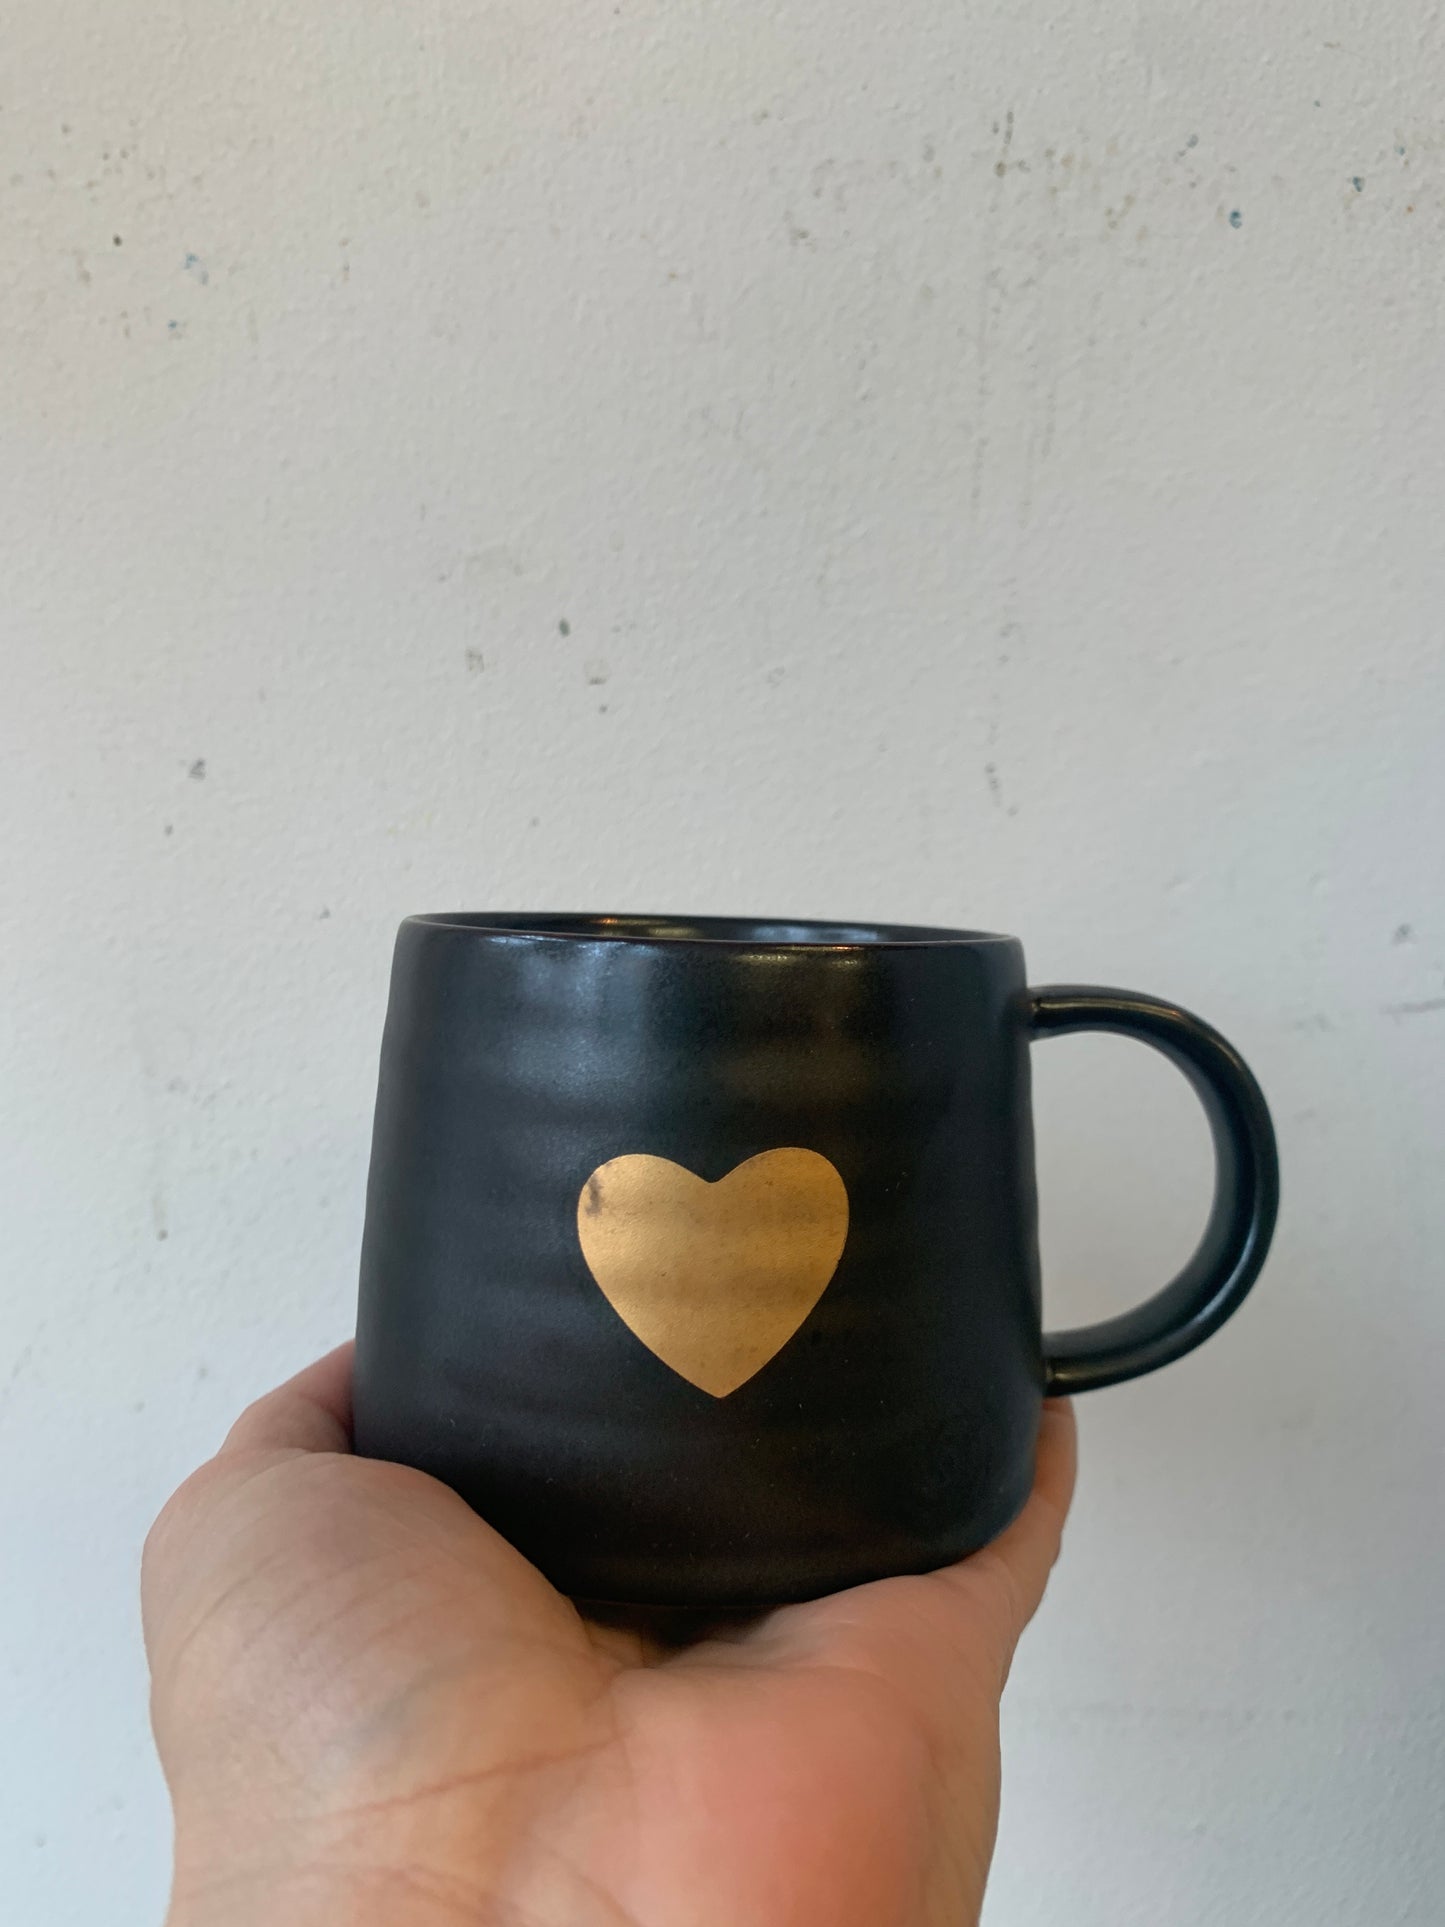 Gold Heart Mug - Black